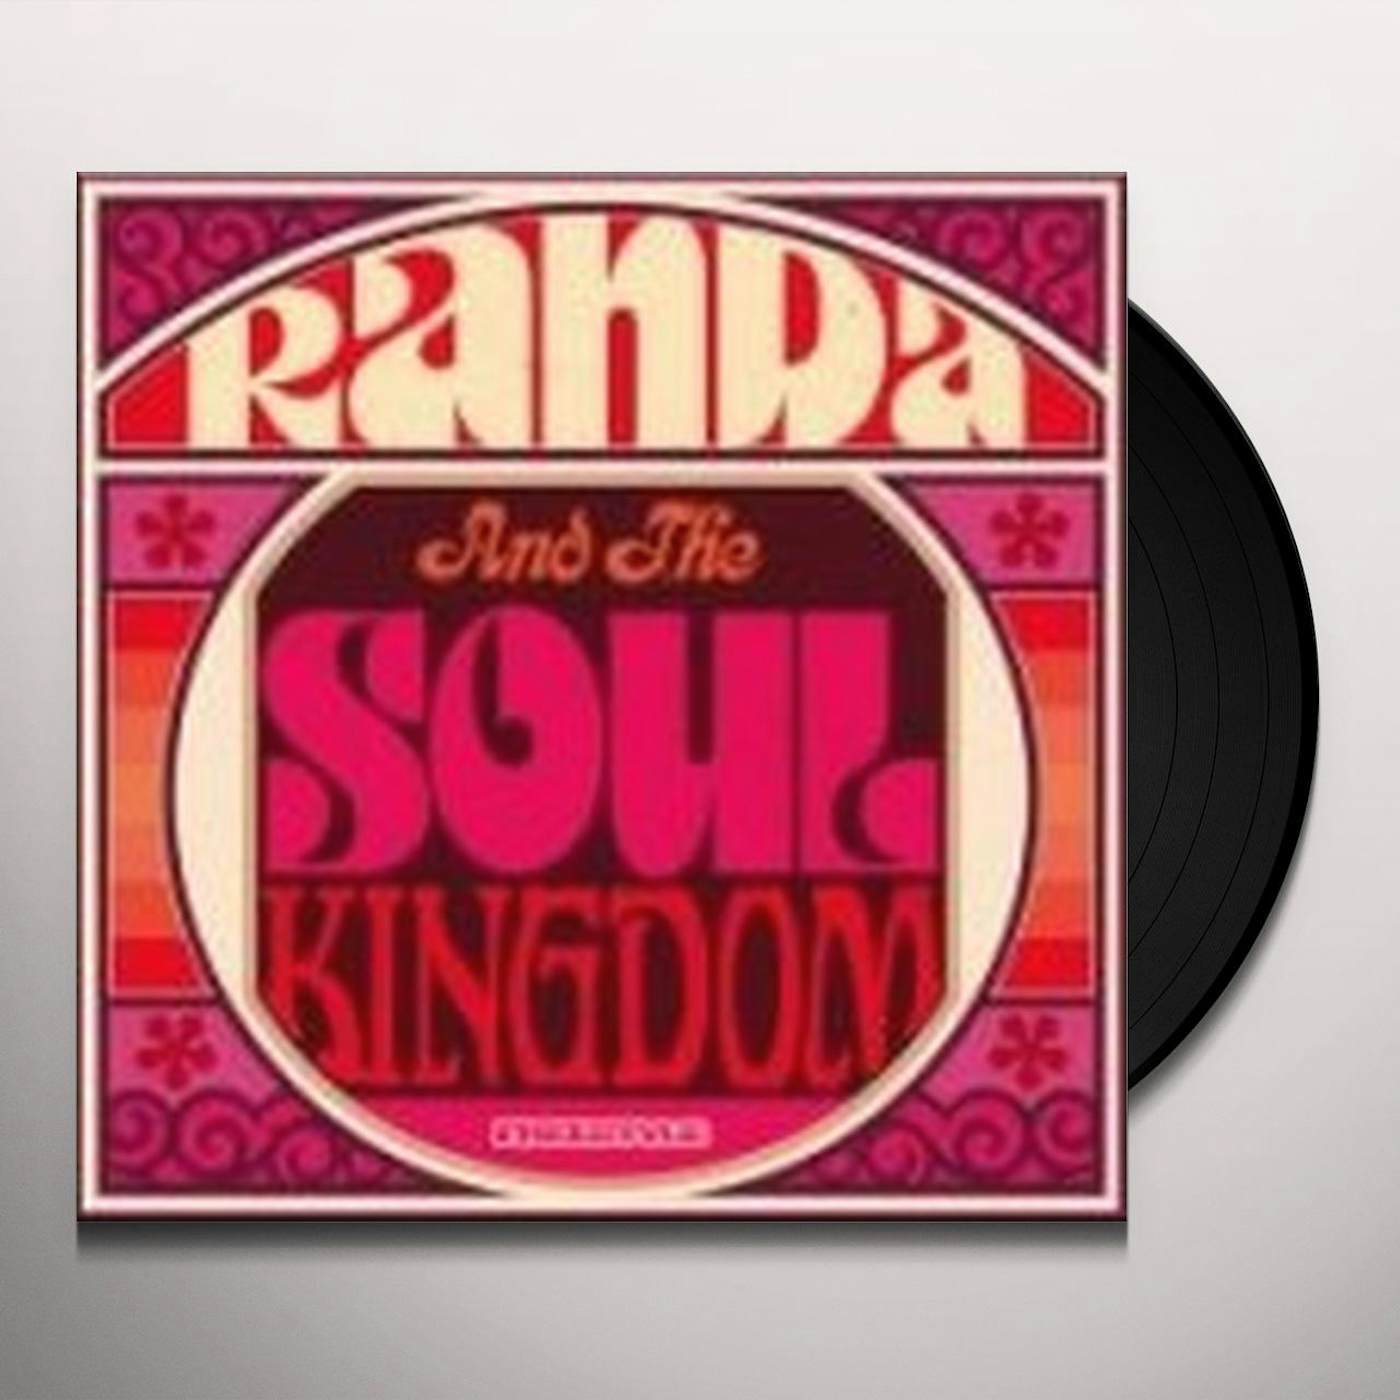 Randa And The Soul Kingdom Vinyl Record